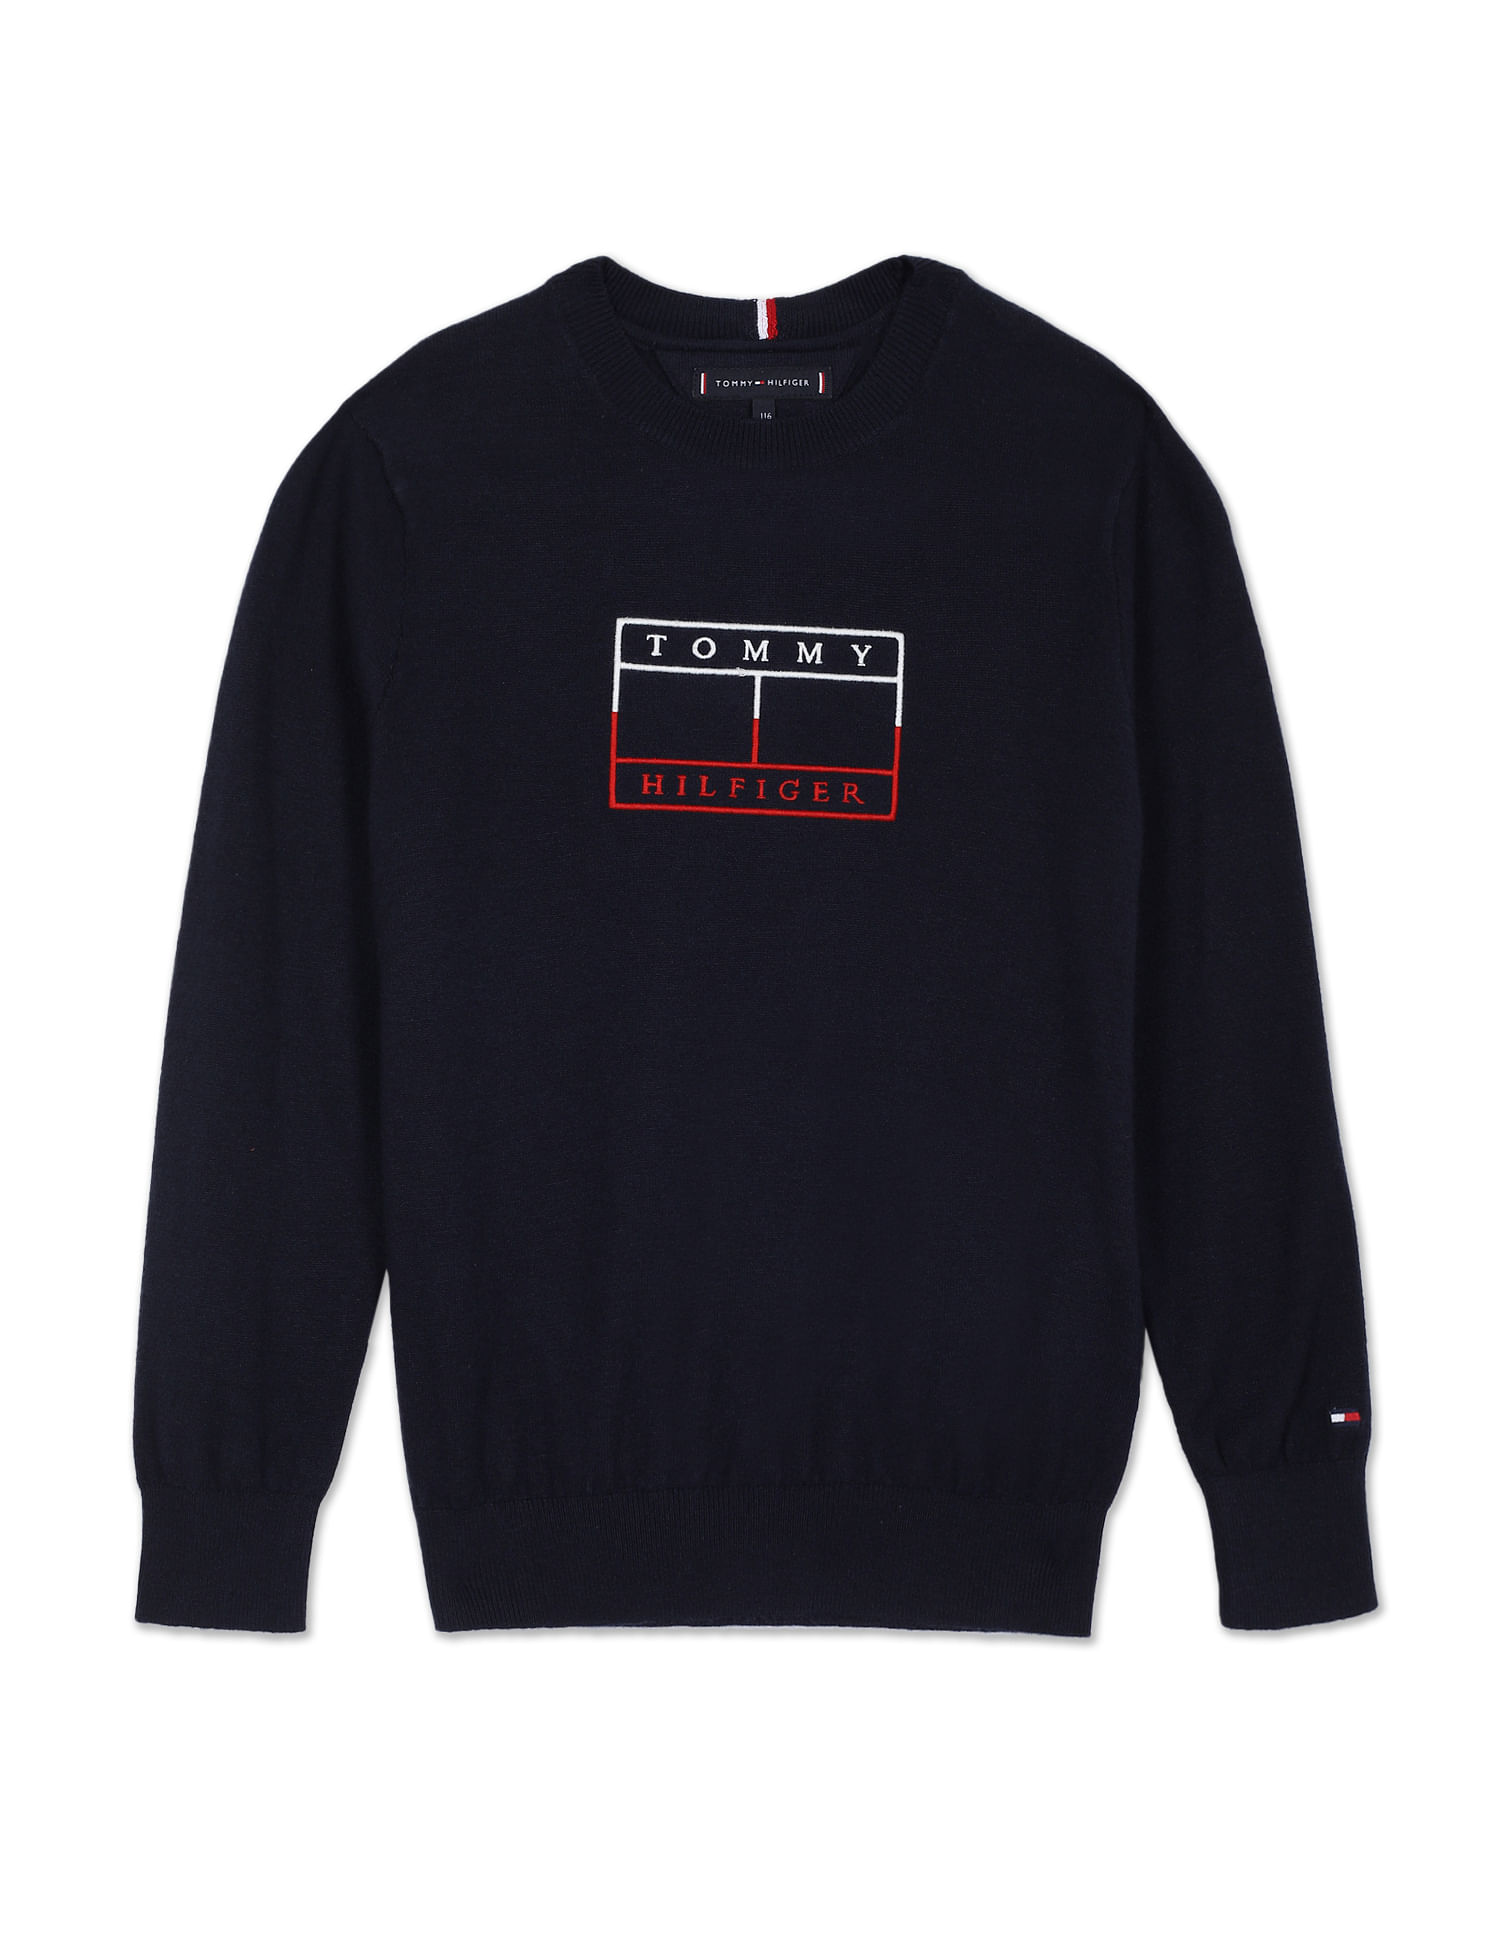 Buy Tommy Hilfiger Kids Boys Grey Embroidered Flag Sweatshirt